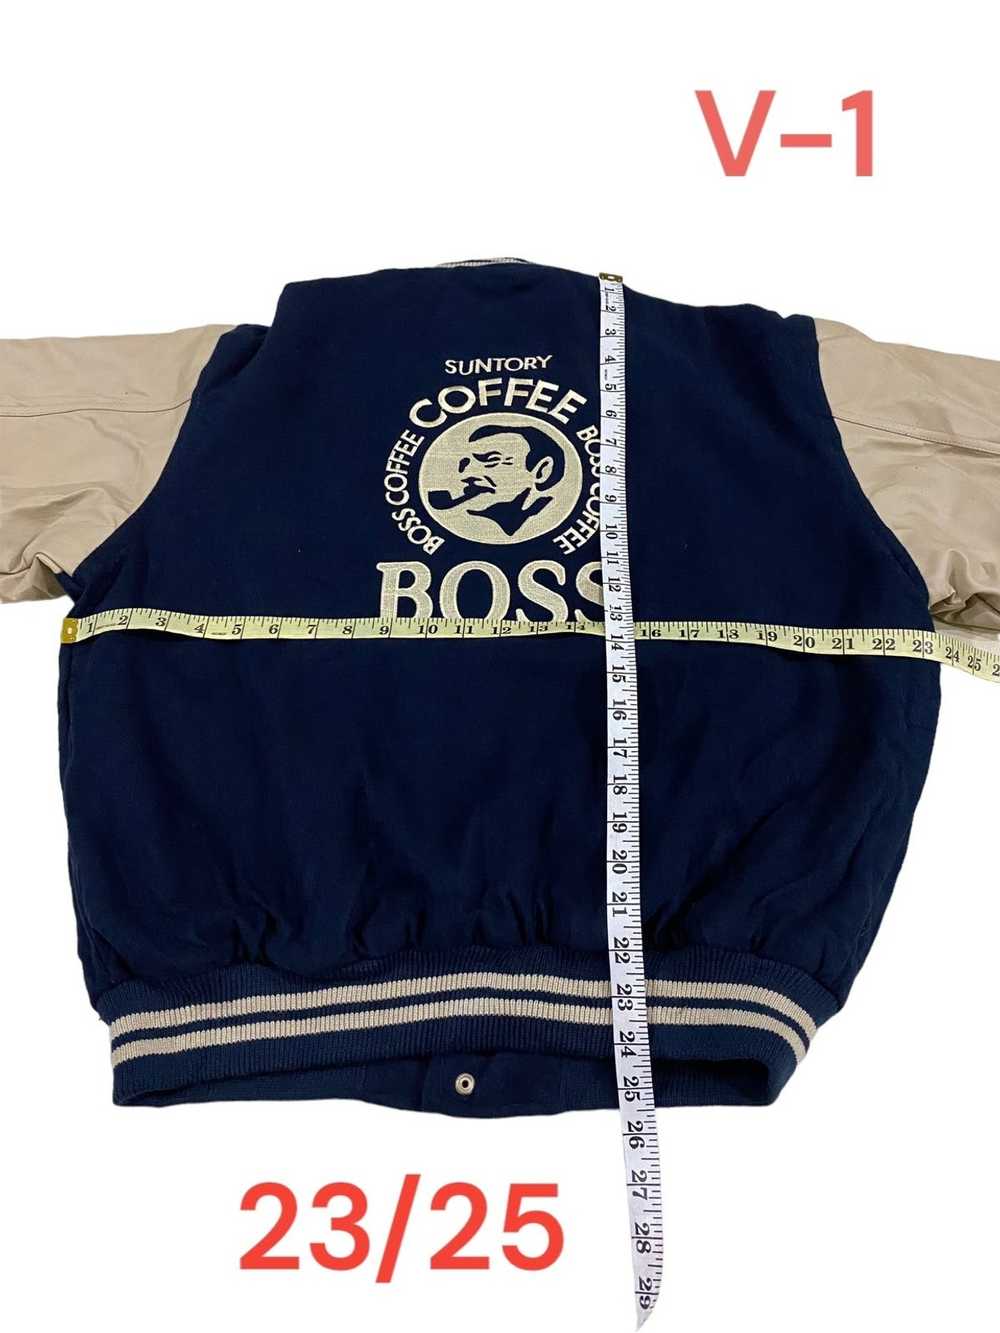 Varsity Jacket Suntory boss coffee varsity jacket - image 6